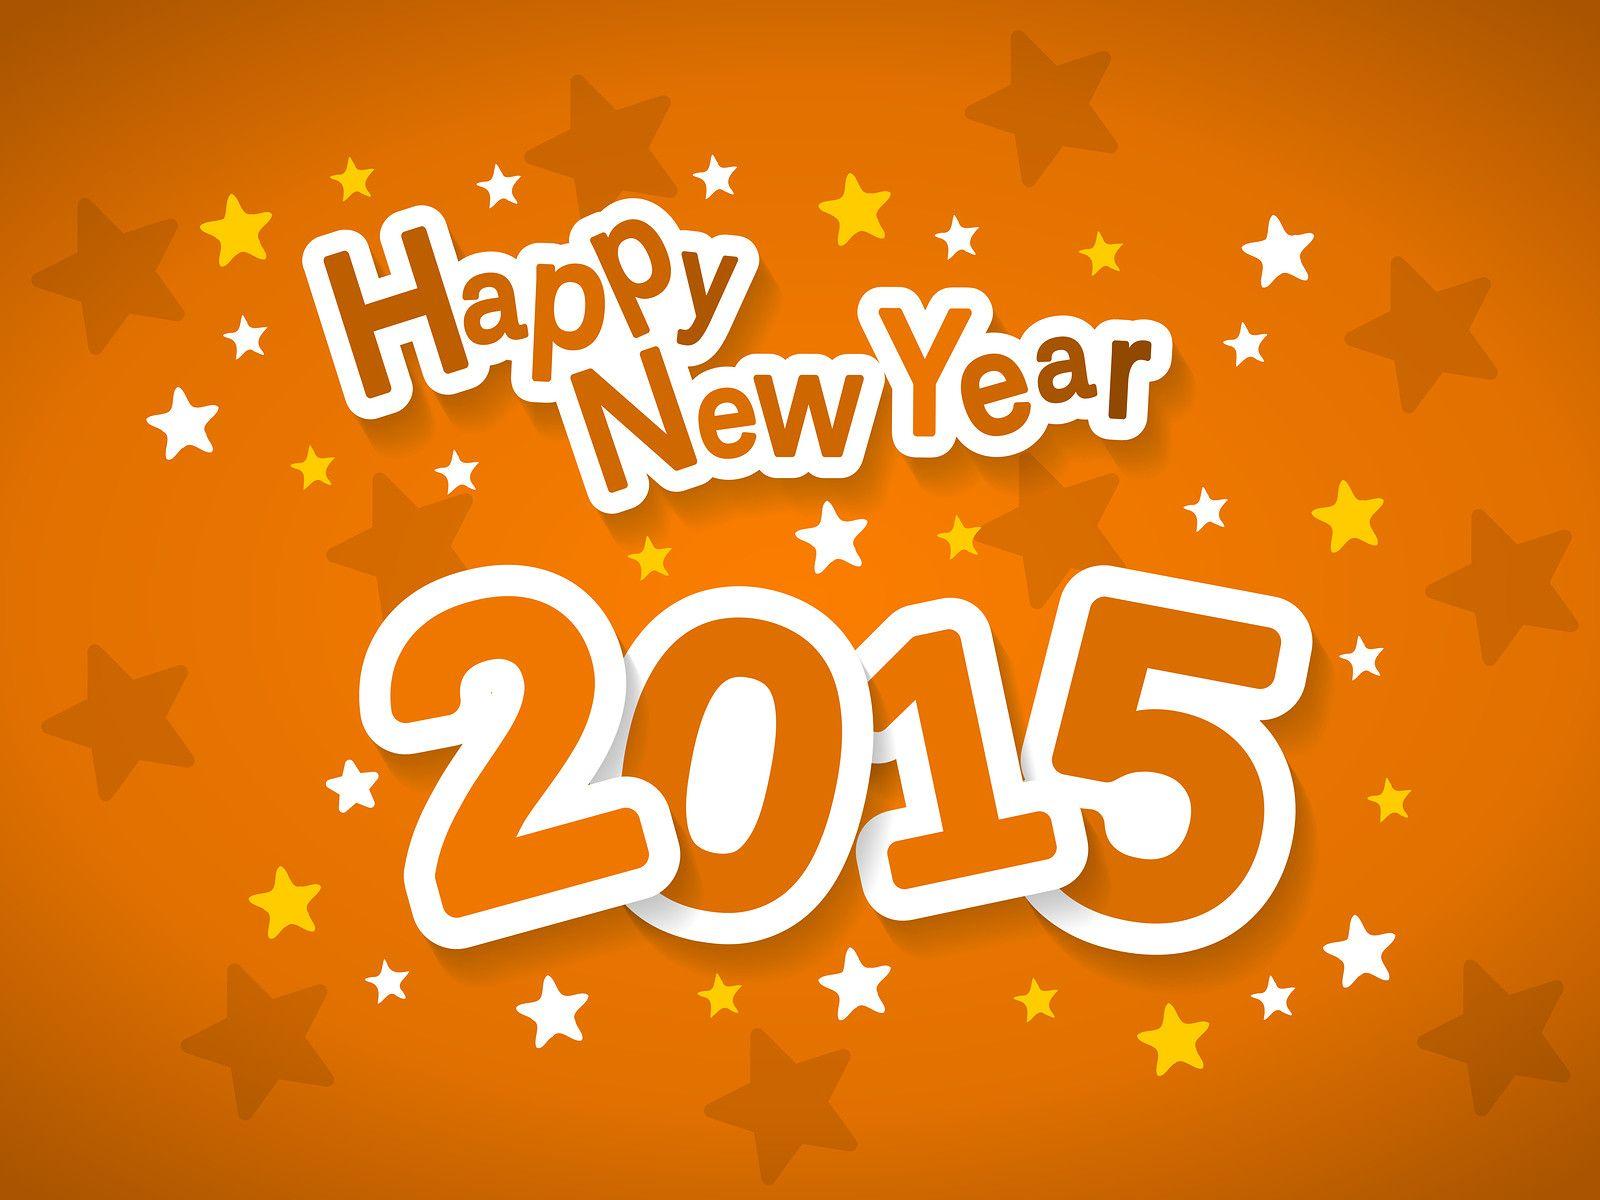 Best HD Happy New Year 2015 Wallpaper For Your Desktop PC